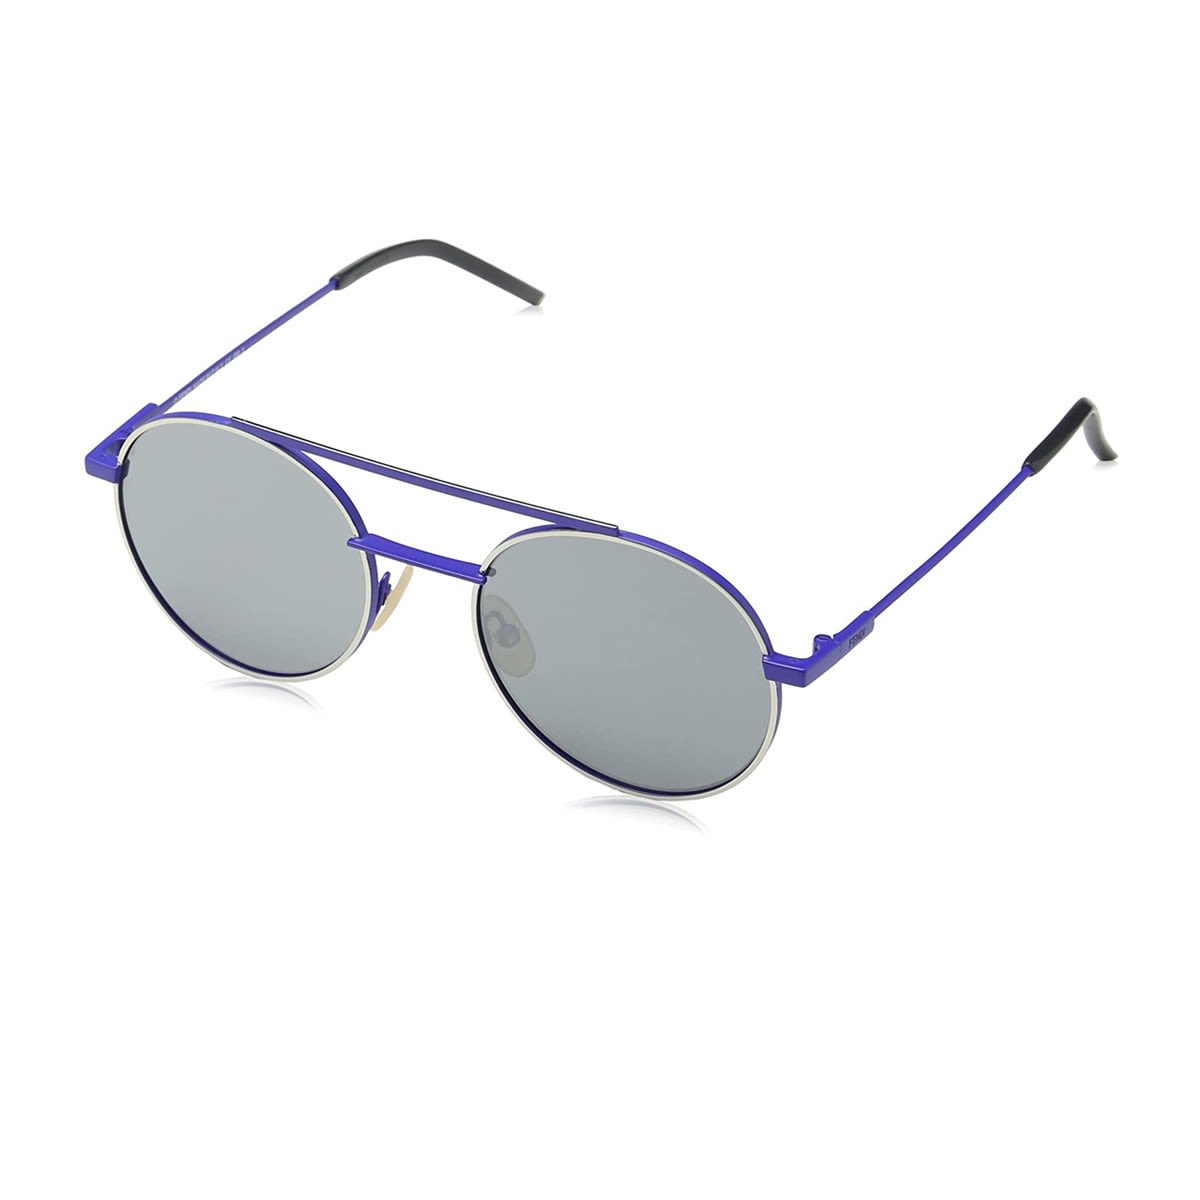 Fendi Eyewear Ff 0221/s Sunglasses